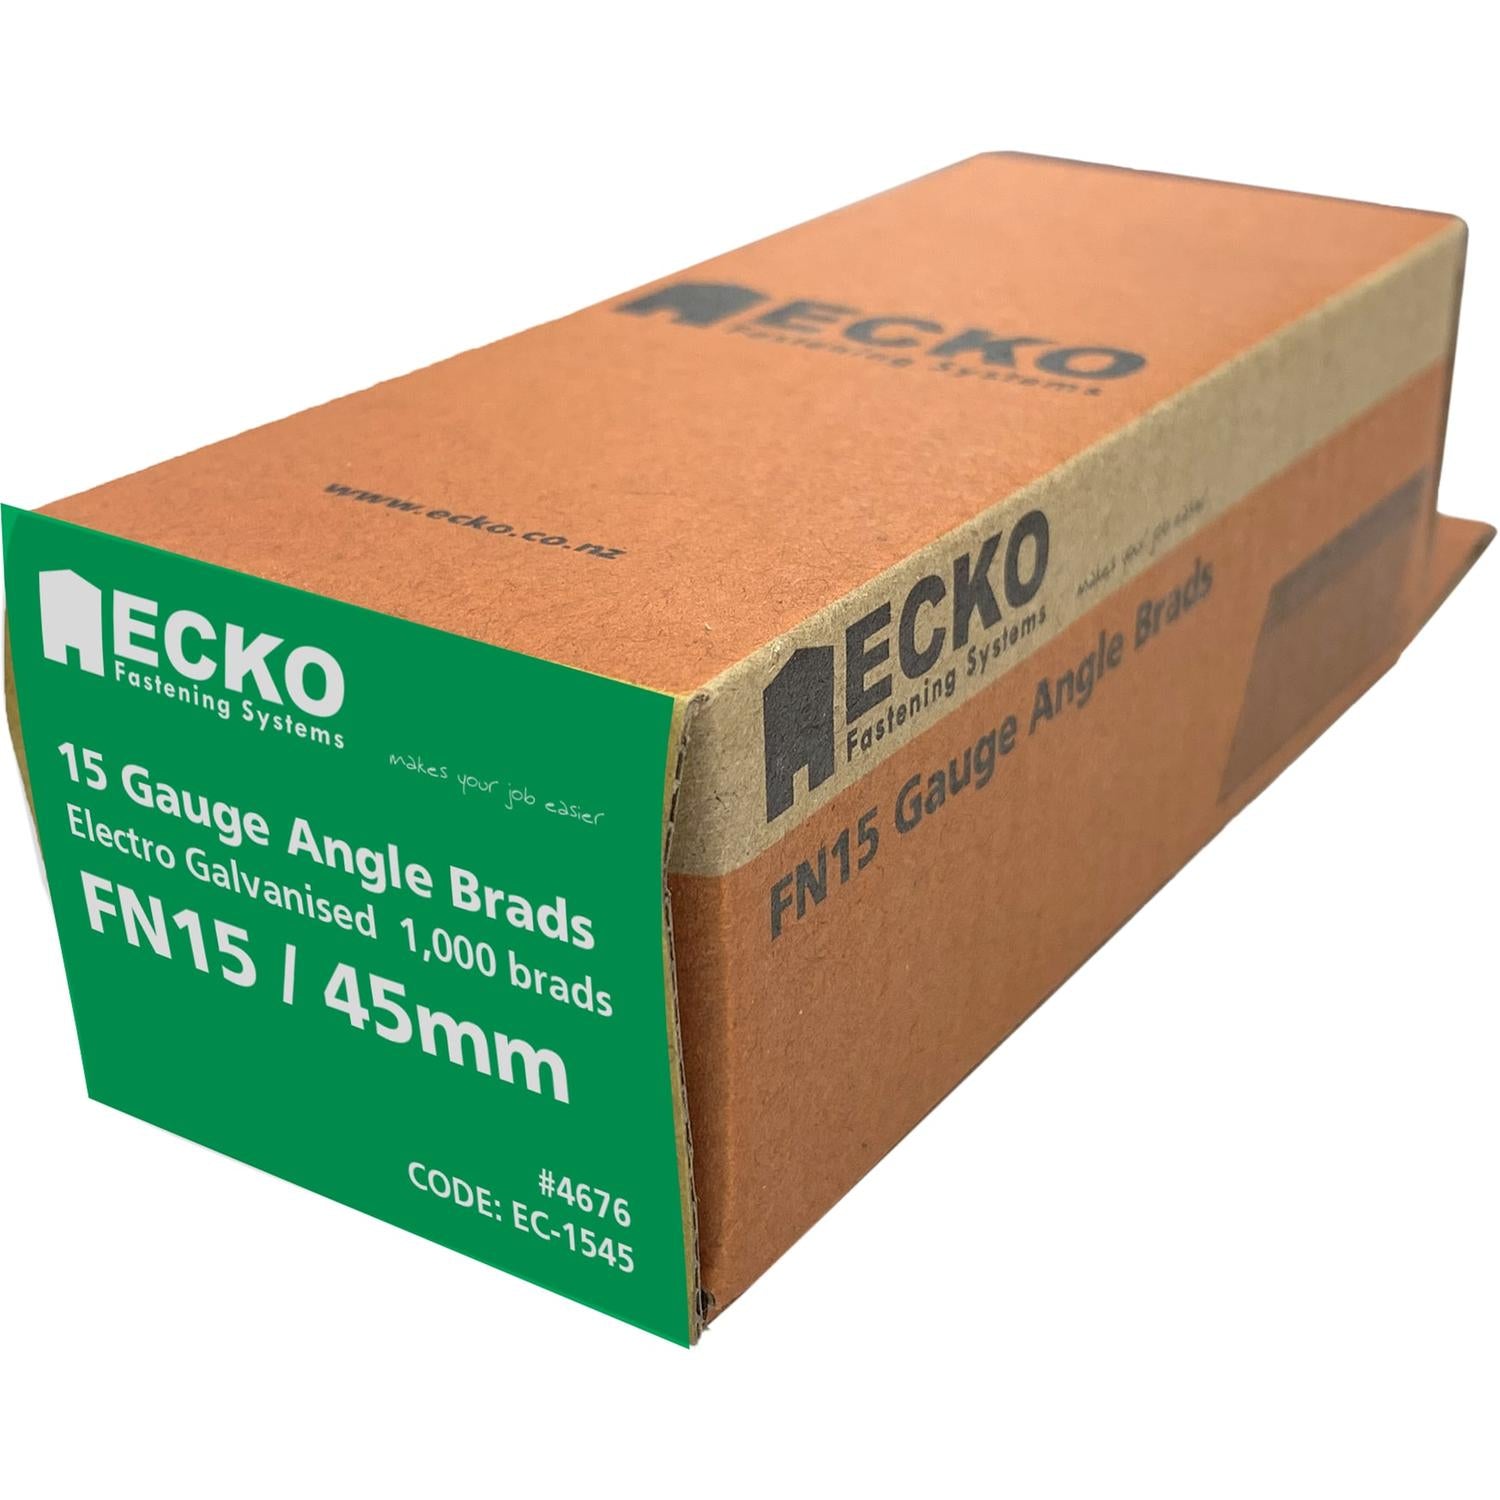 Ecko 15G X 45Mm Angle Brads Electro Galvanised (1000 Box)